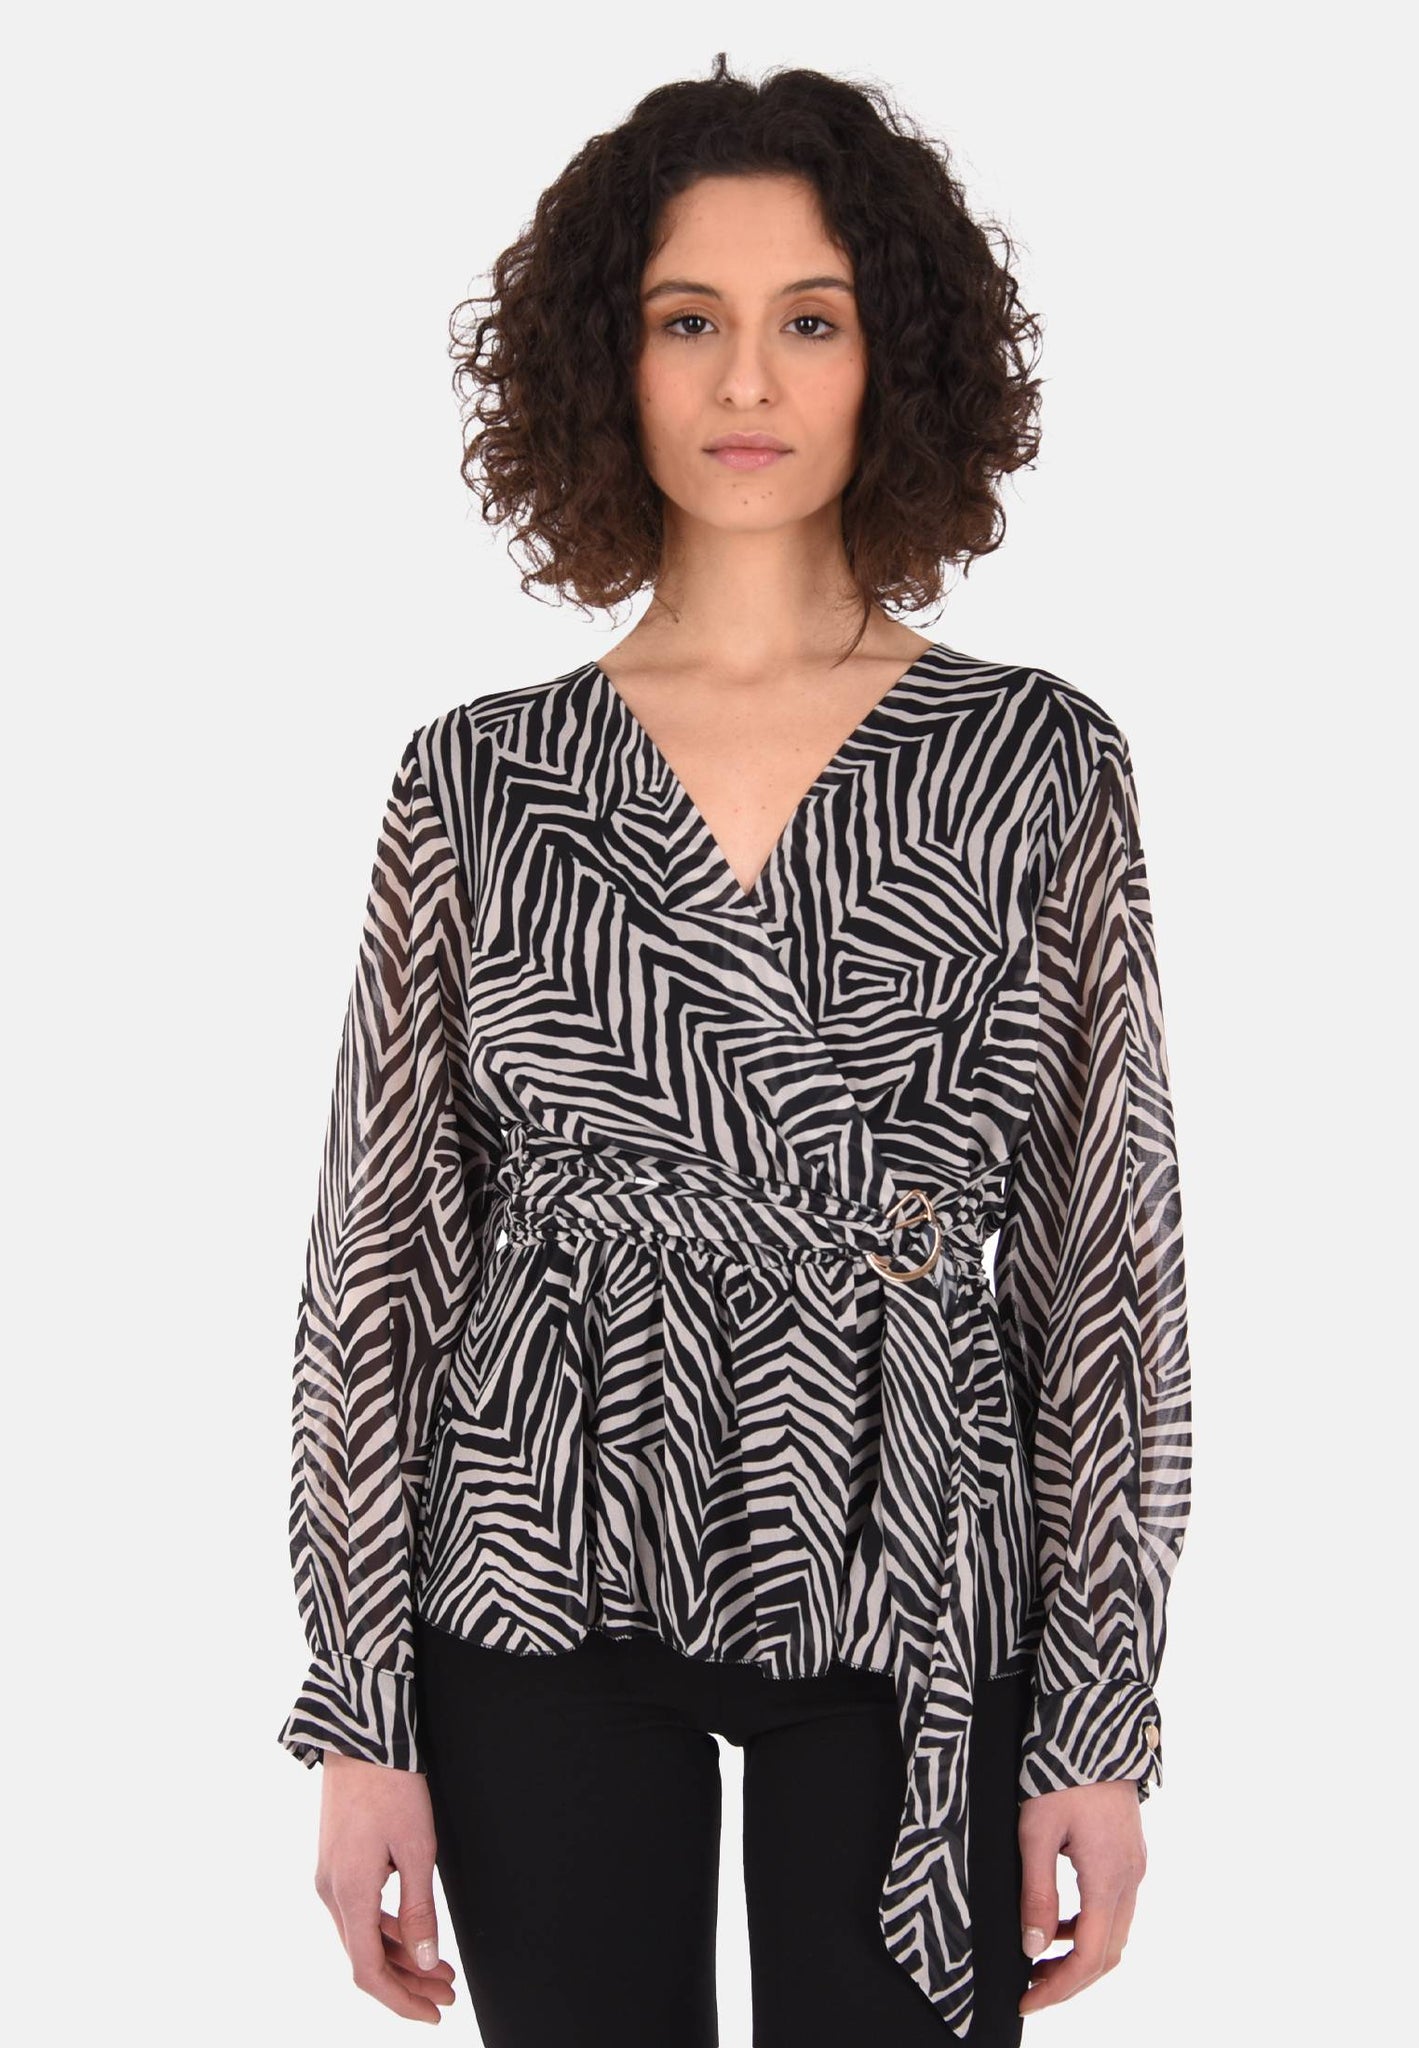 Zebra print blouse with v-neck